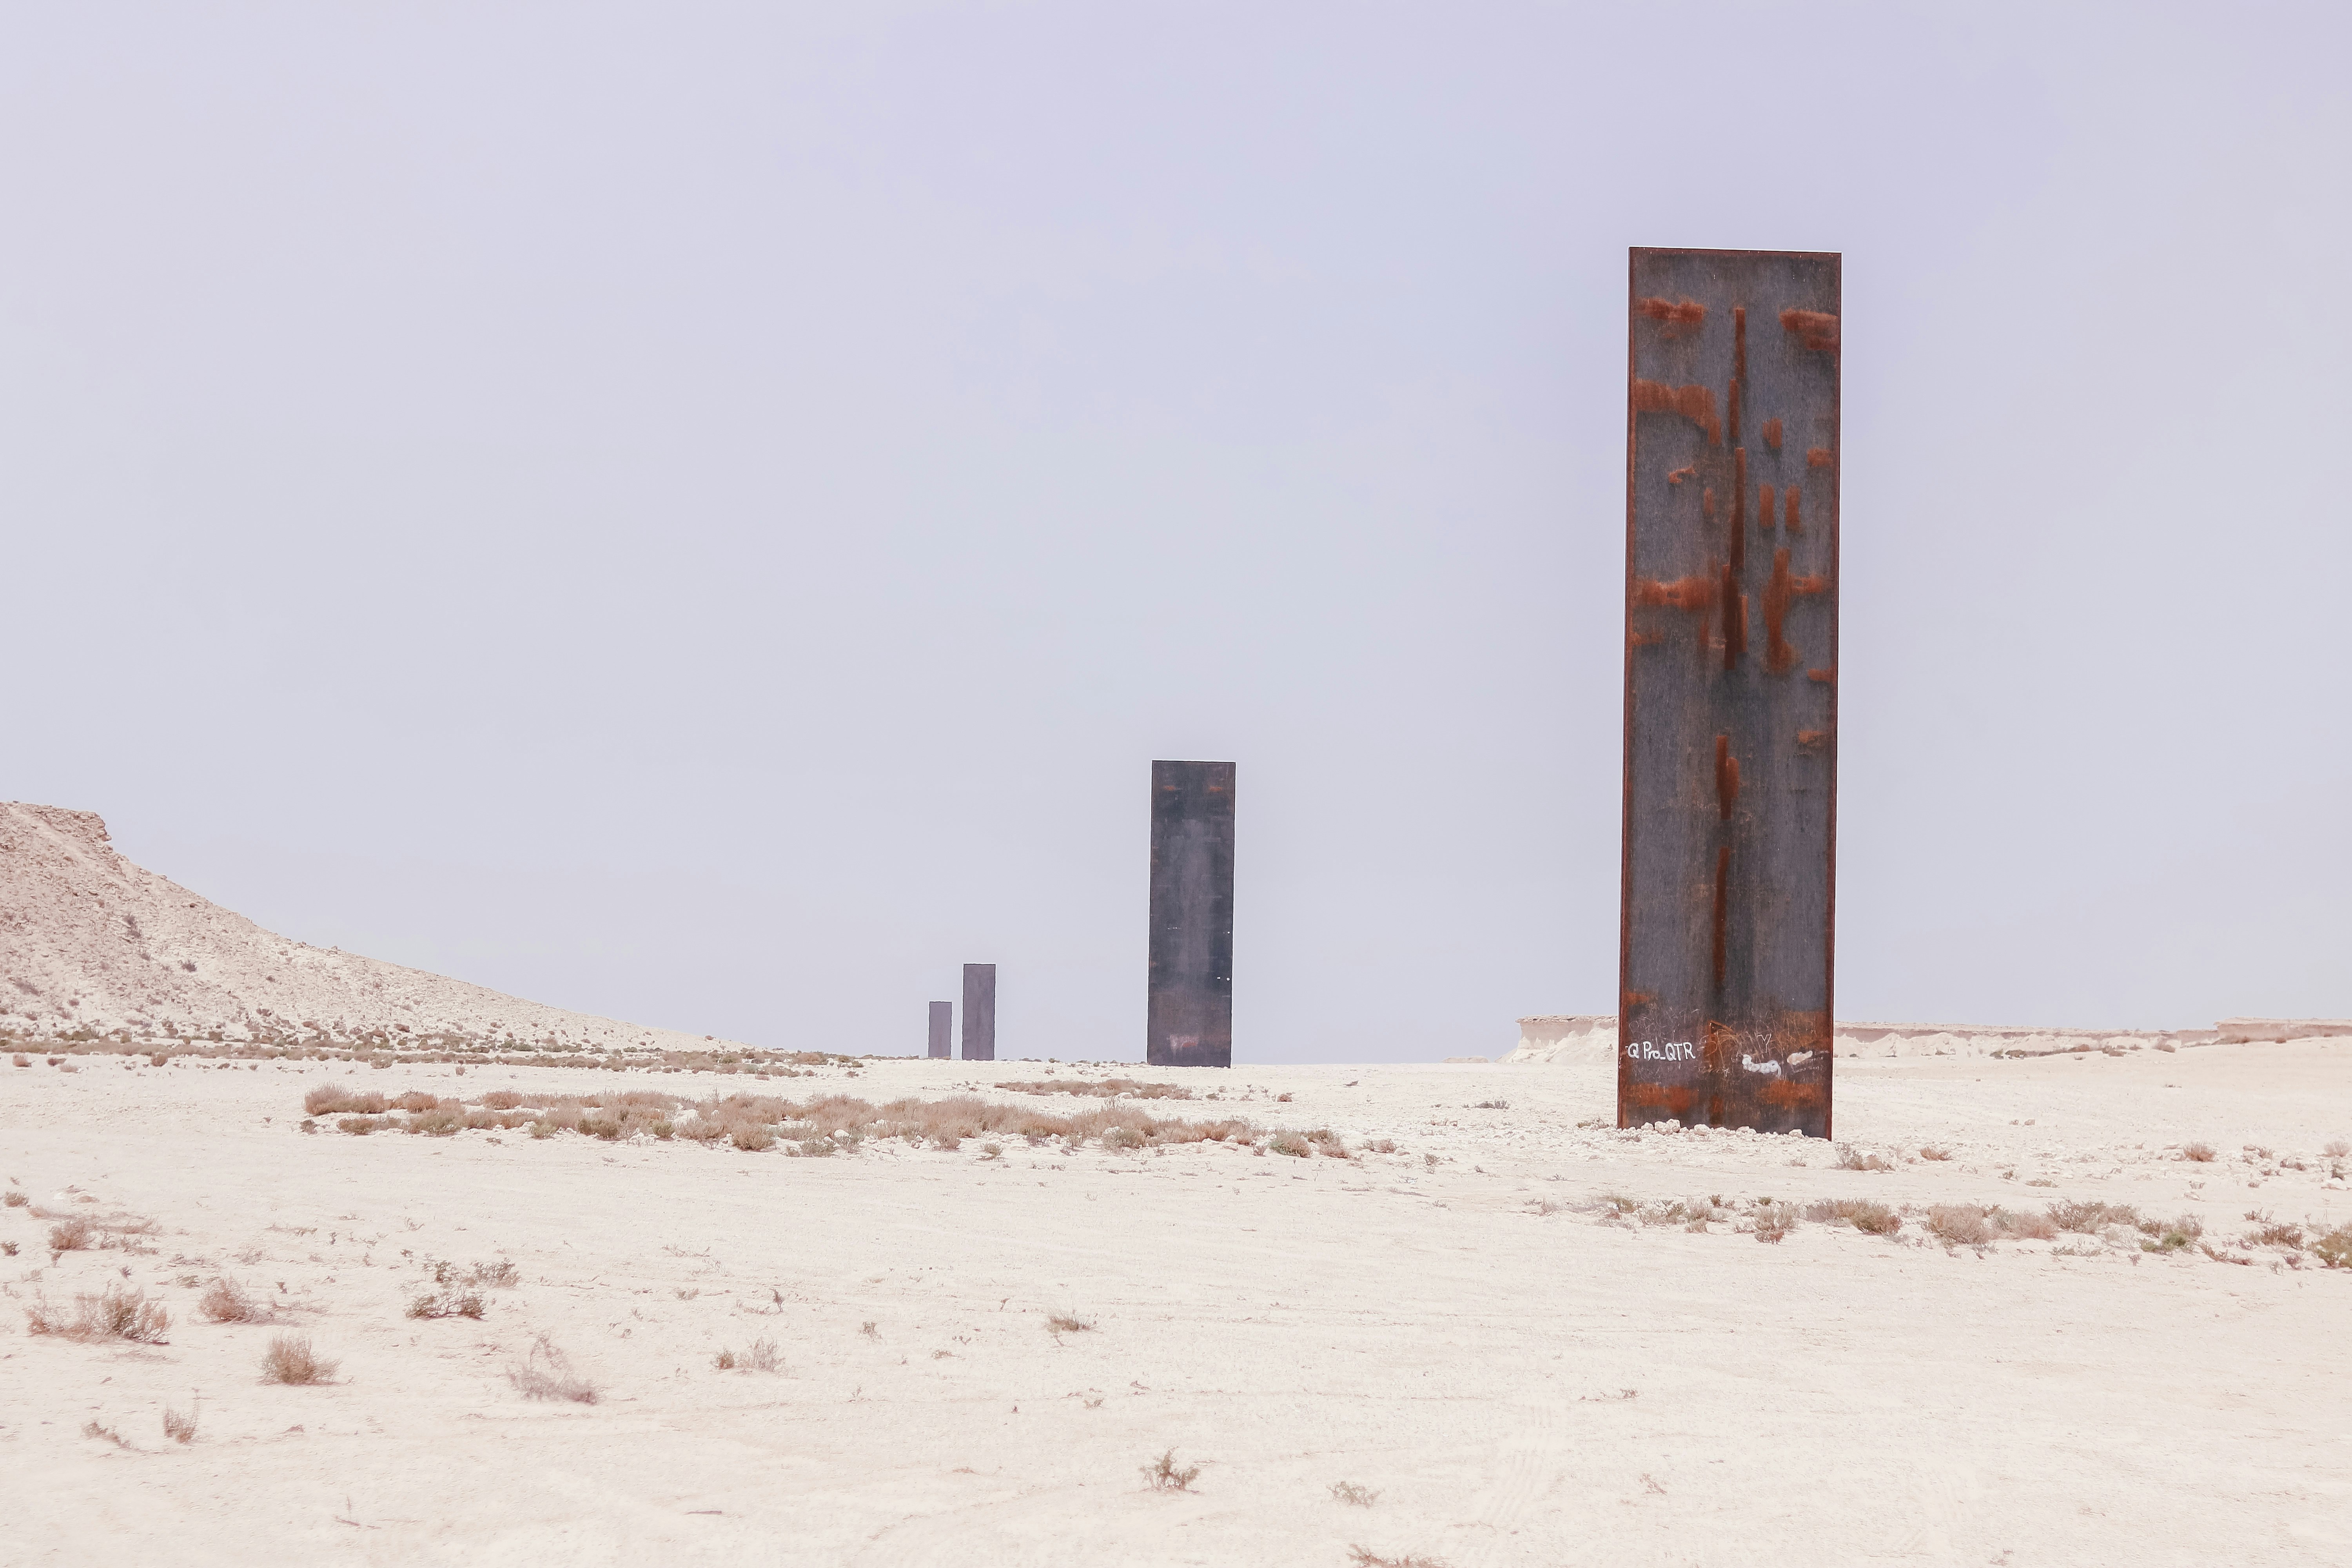 East-West / West-East by Richard Serra